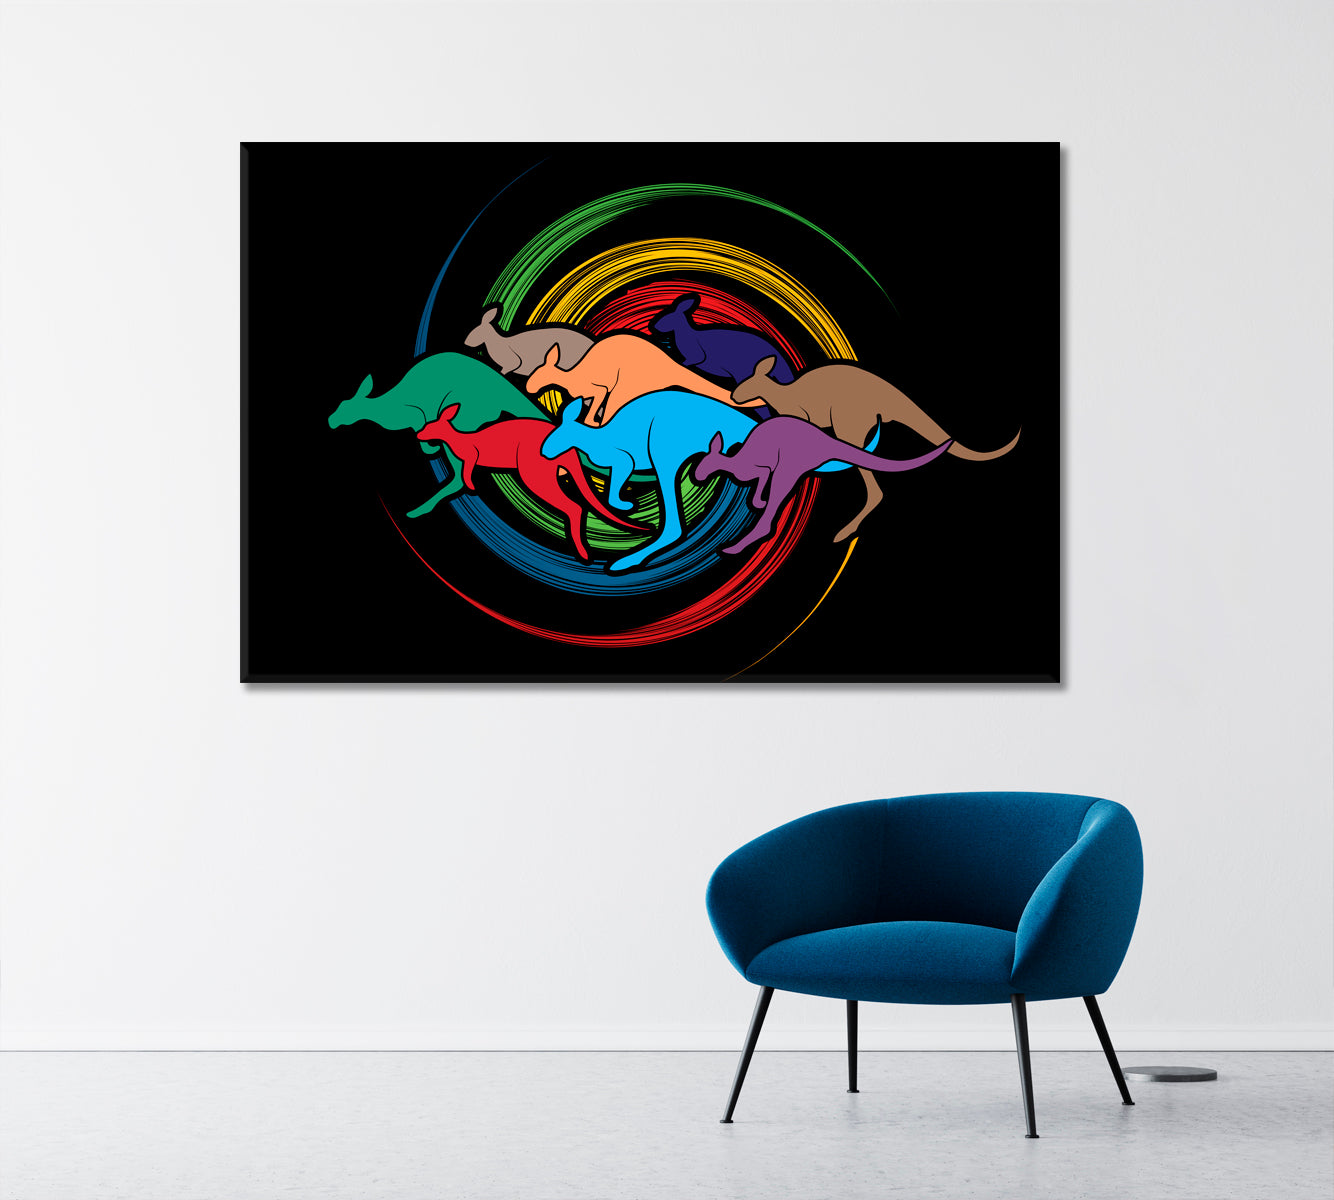 VIVID SPIN WHEEL Group Of Kangaroo Jumping Animals Canvas Print Artesty   